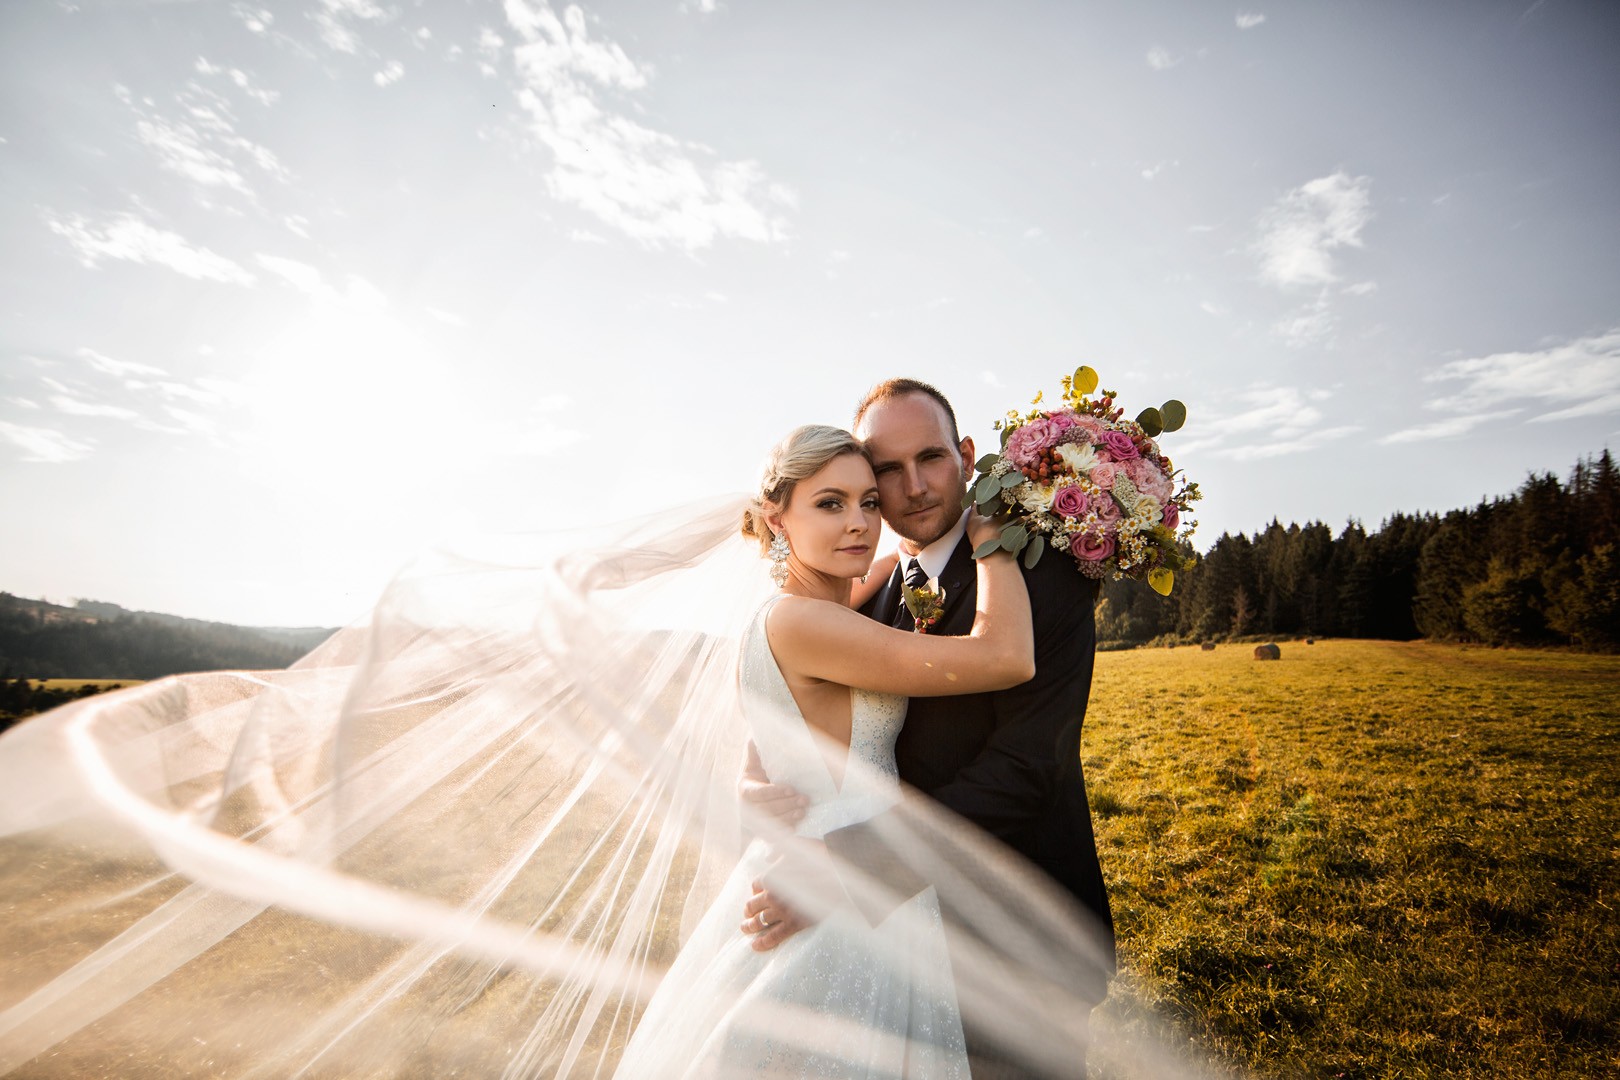 Wedding photos from the wedding day of Miška and Stanka. - 0533.jpg